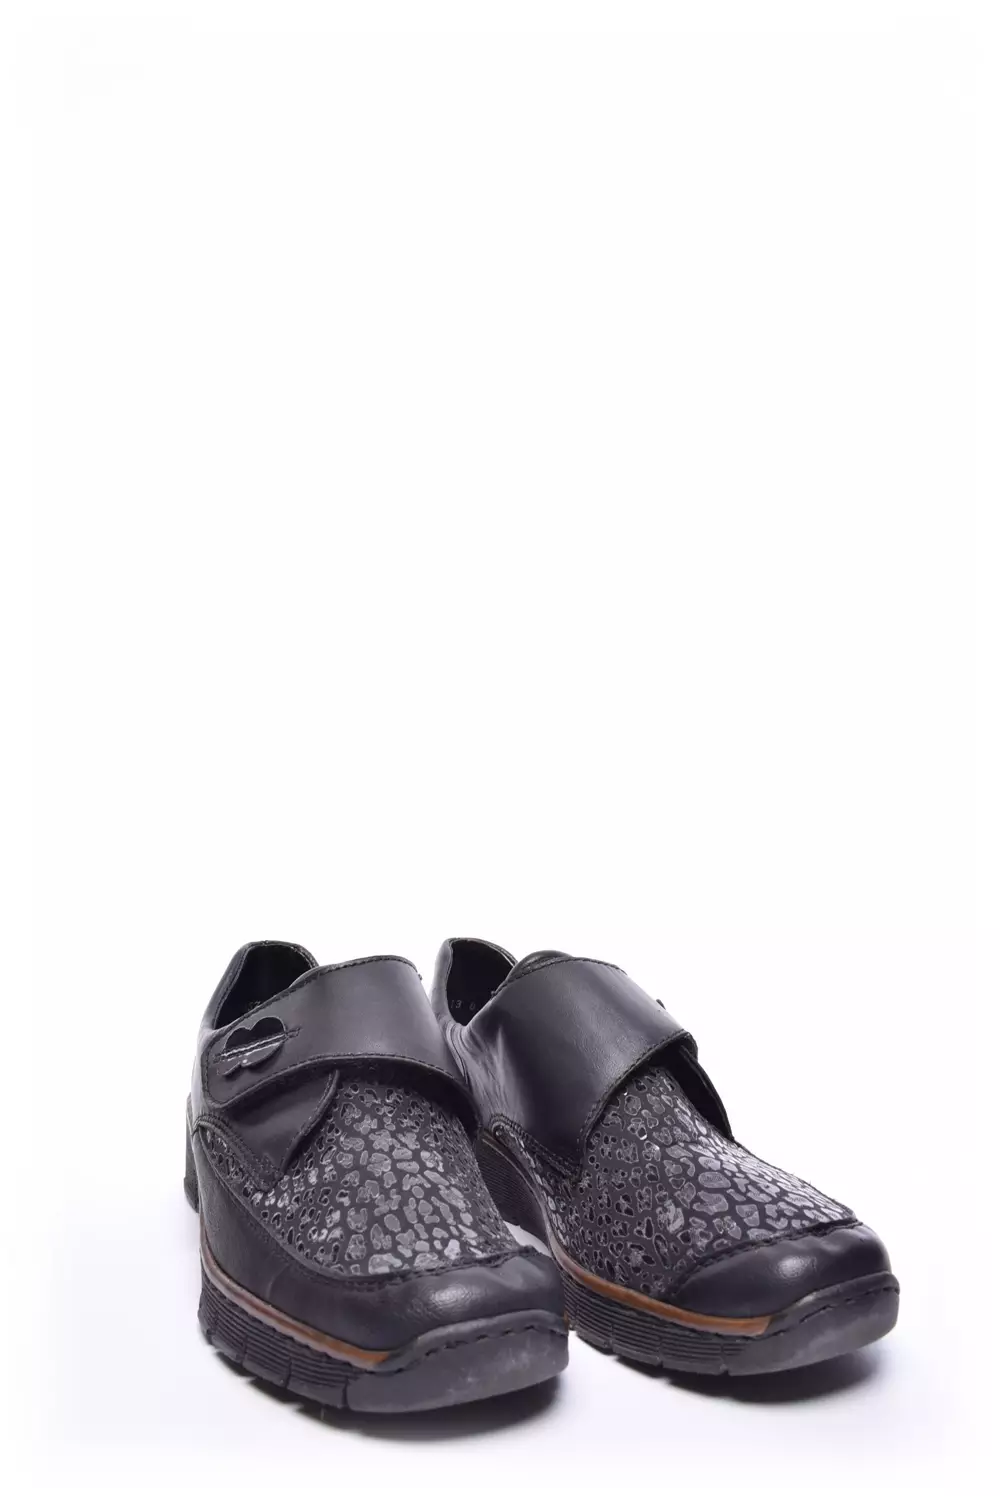 Pantofi dama elastici [2]